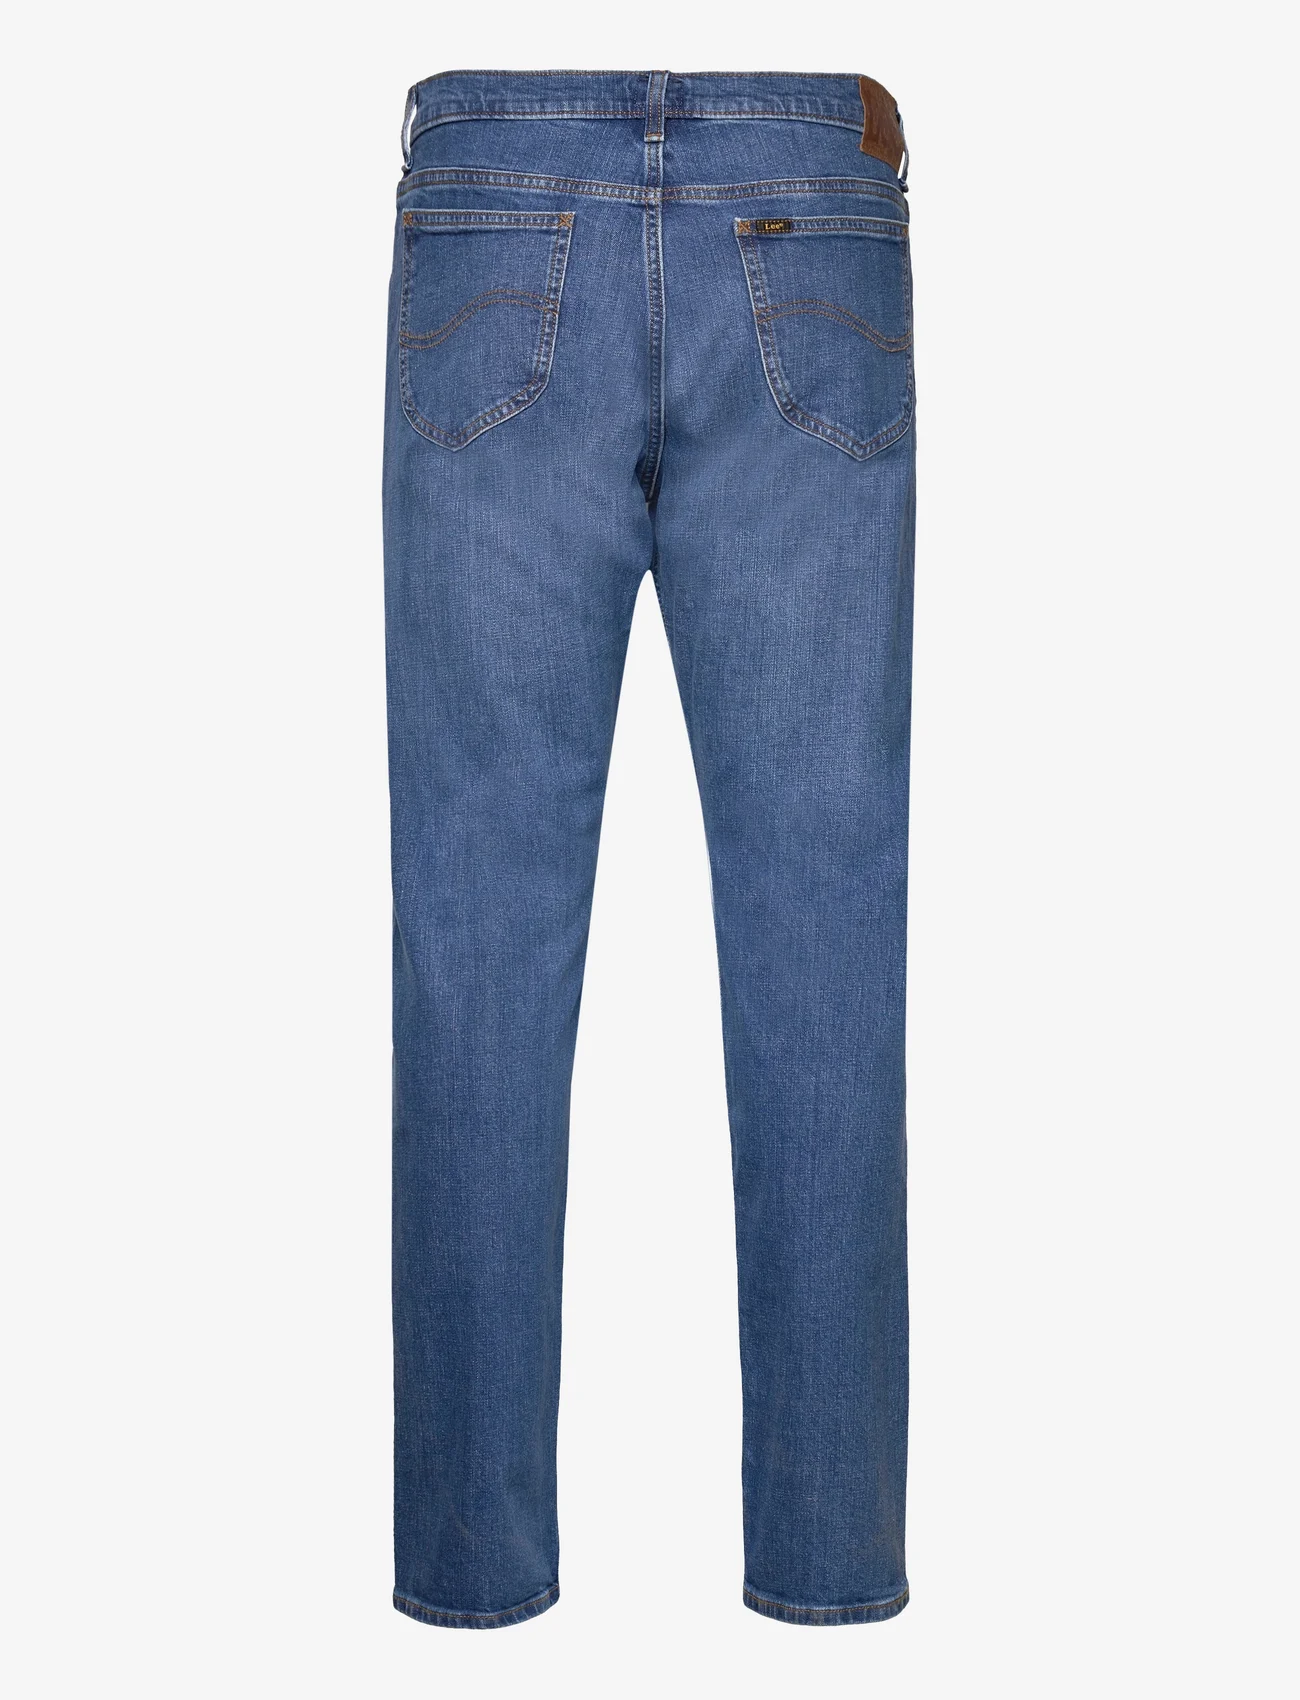 Lee Jeans - RIDER - slim jeans - moody blue used - 1